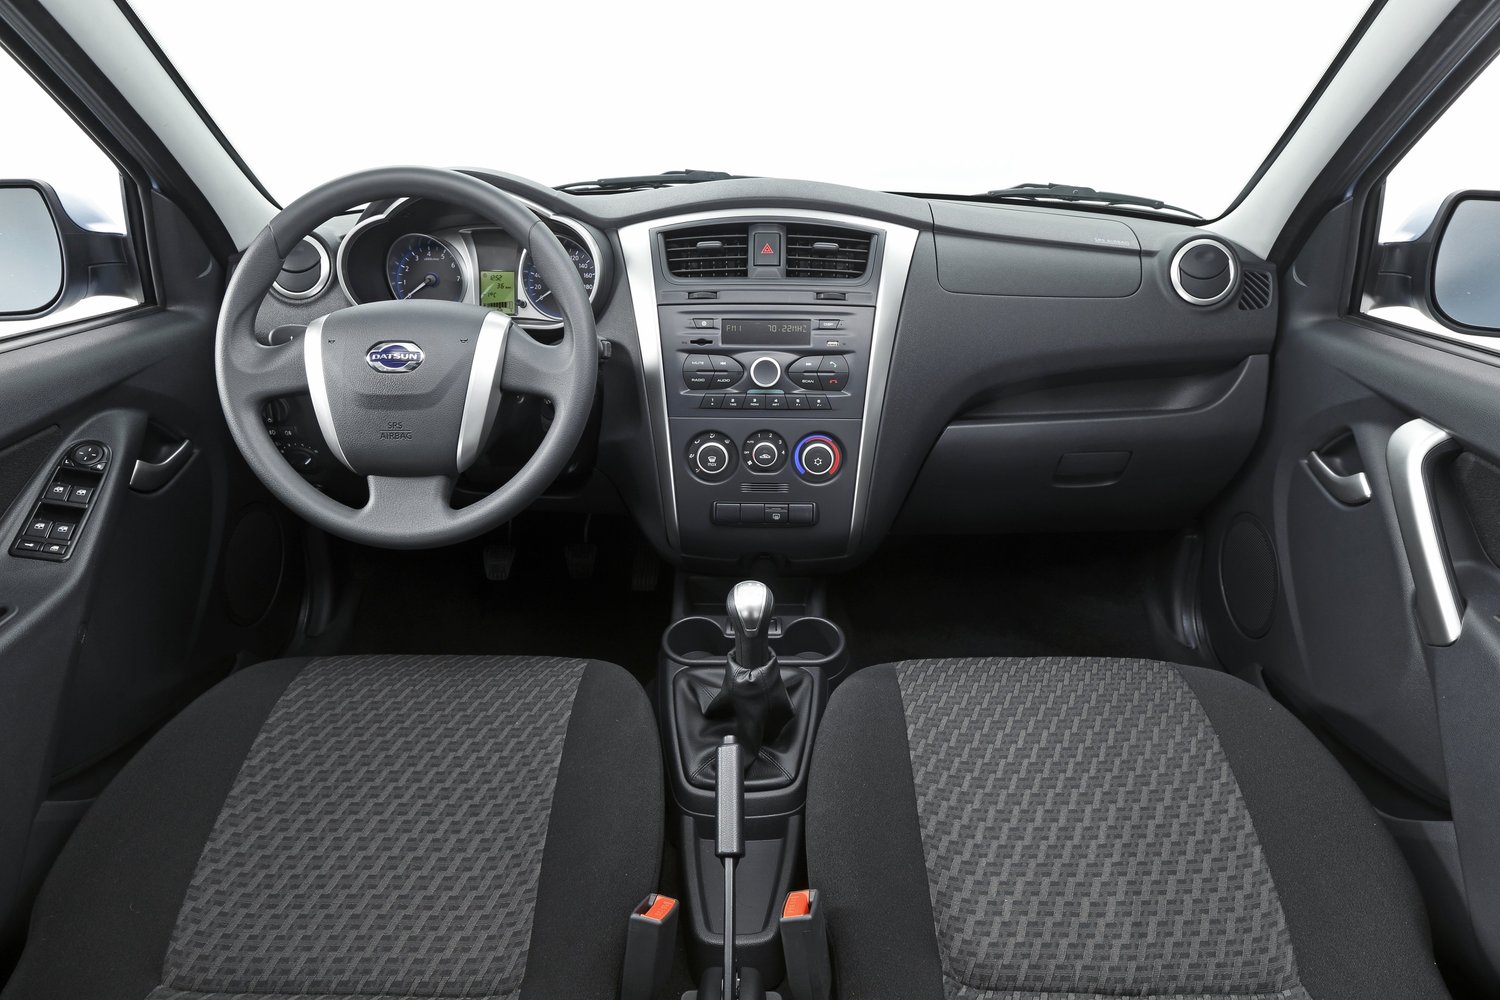 седан Datsun on-DO 2014 - 2016г выпуска модификация Access 1.6 MT (82 л.с.)